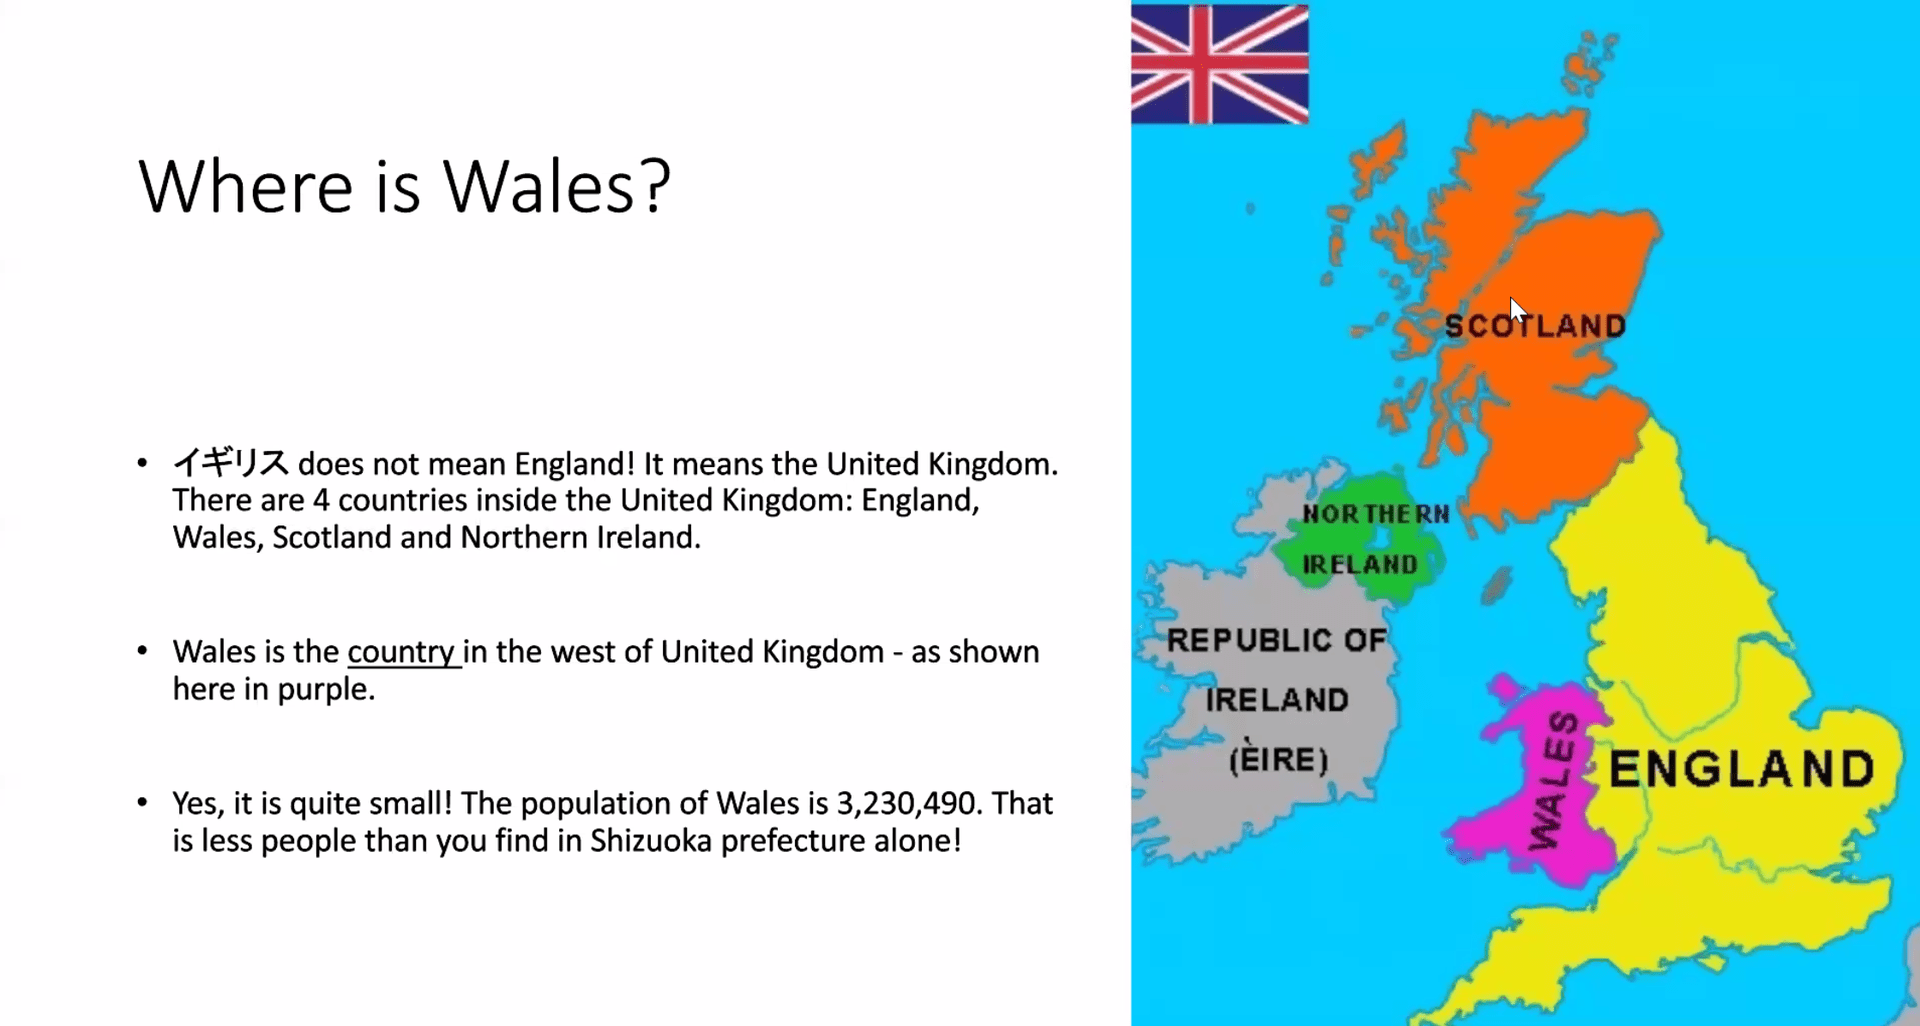 England、Wales、Scotland、Northern Irelandの4つのcountryで構成されるUnited Kingdom